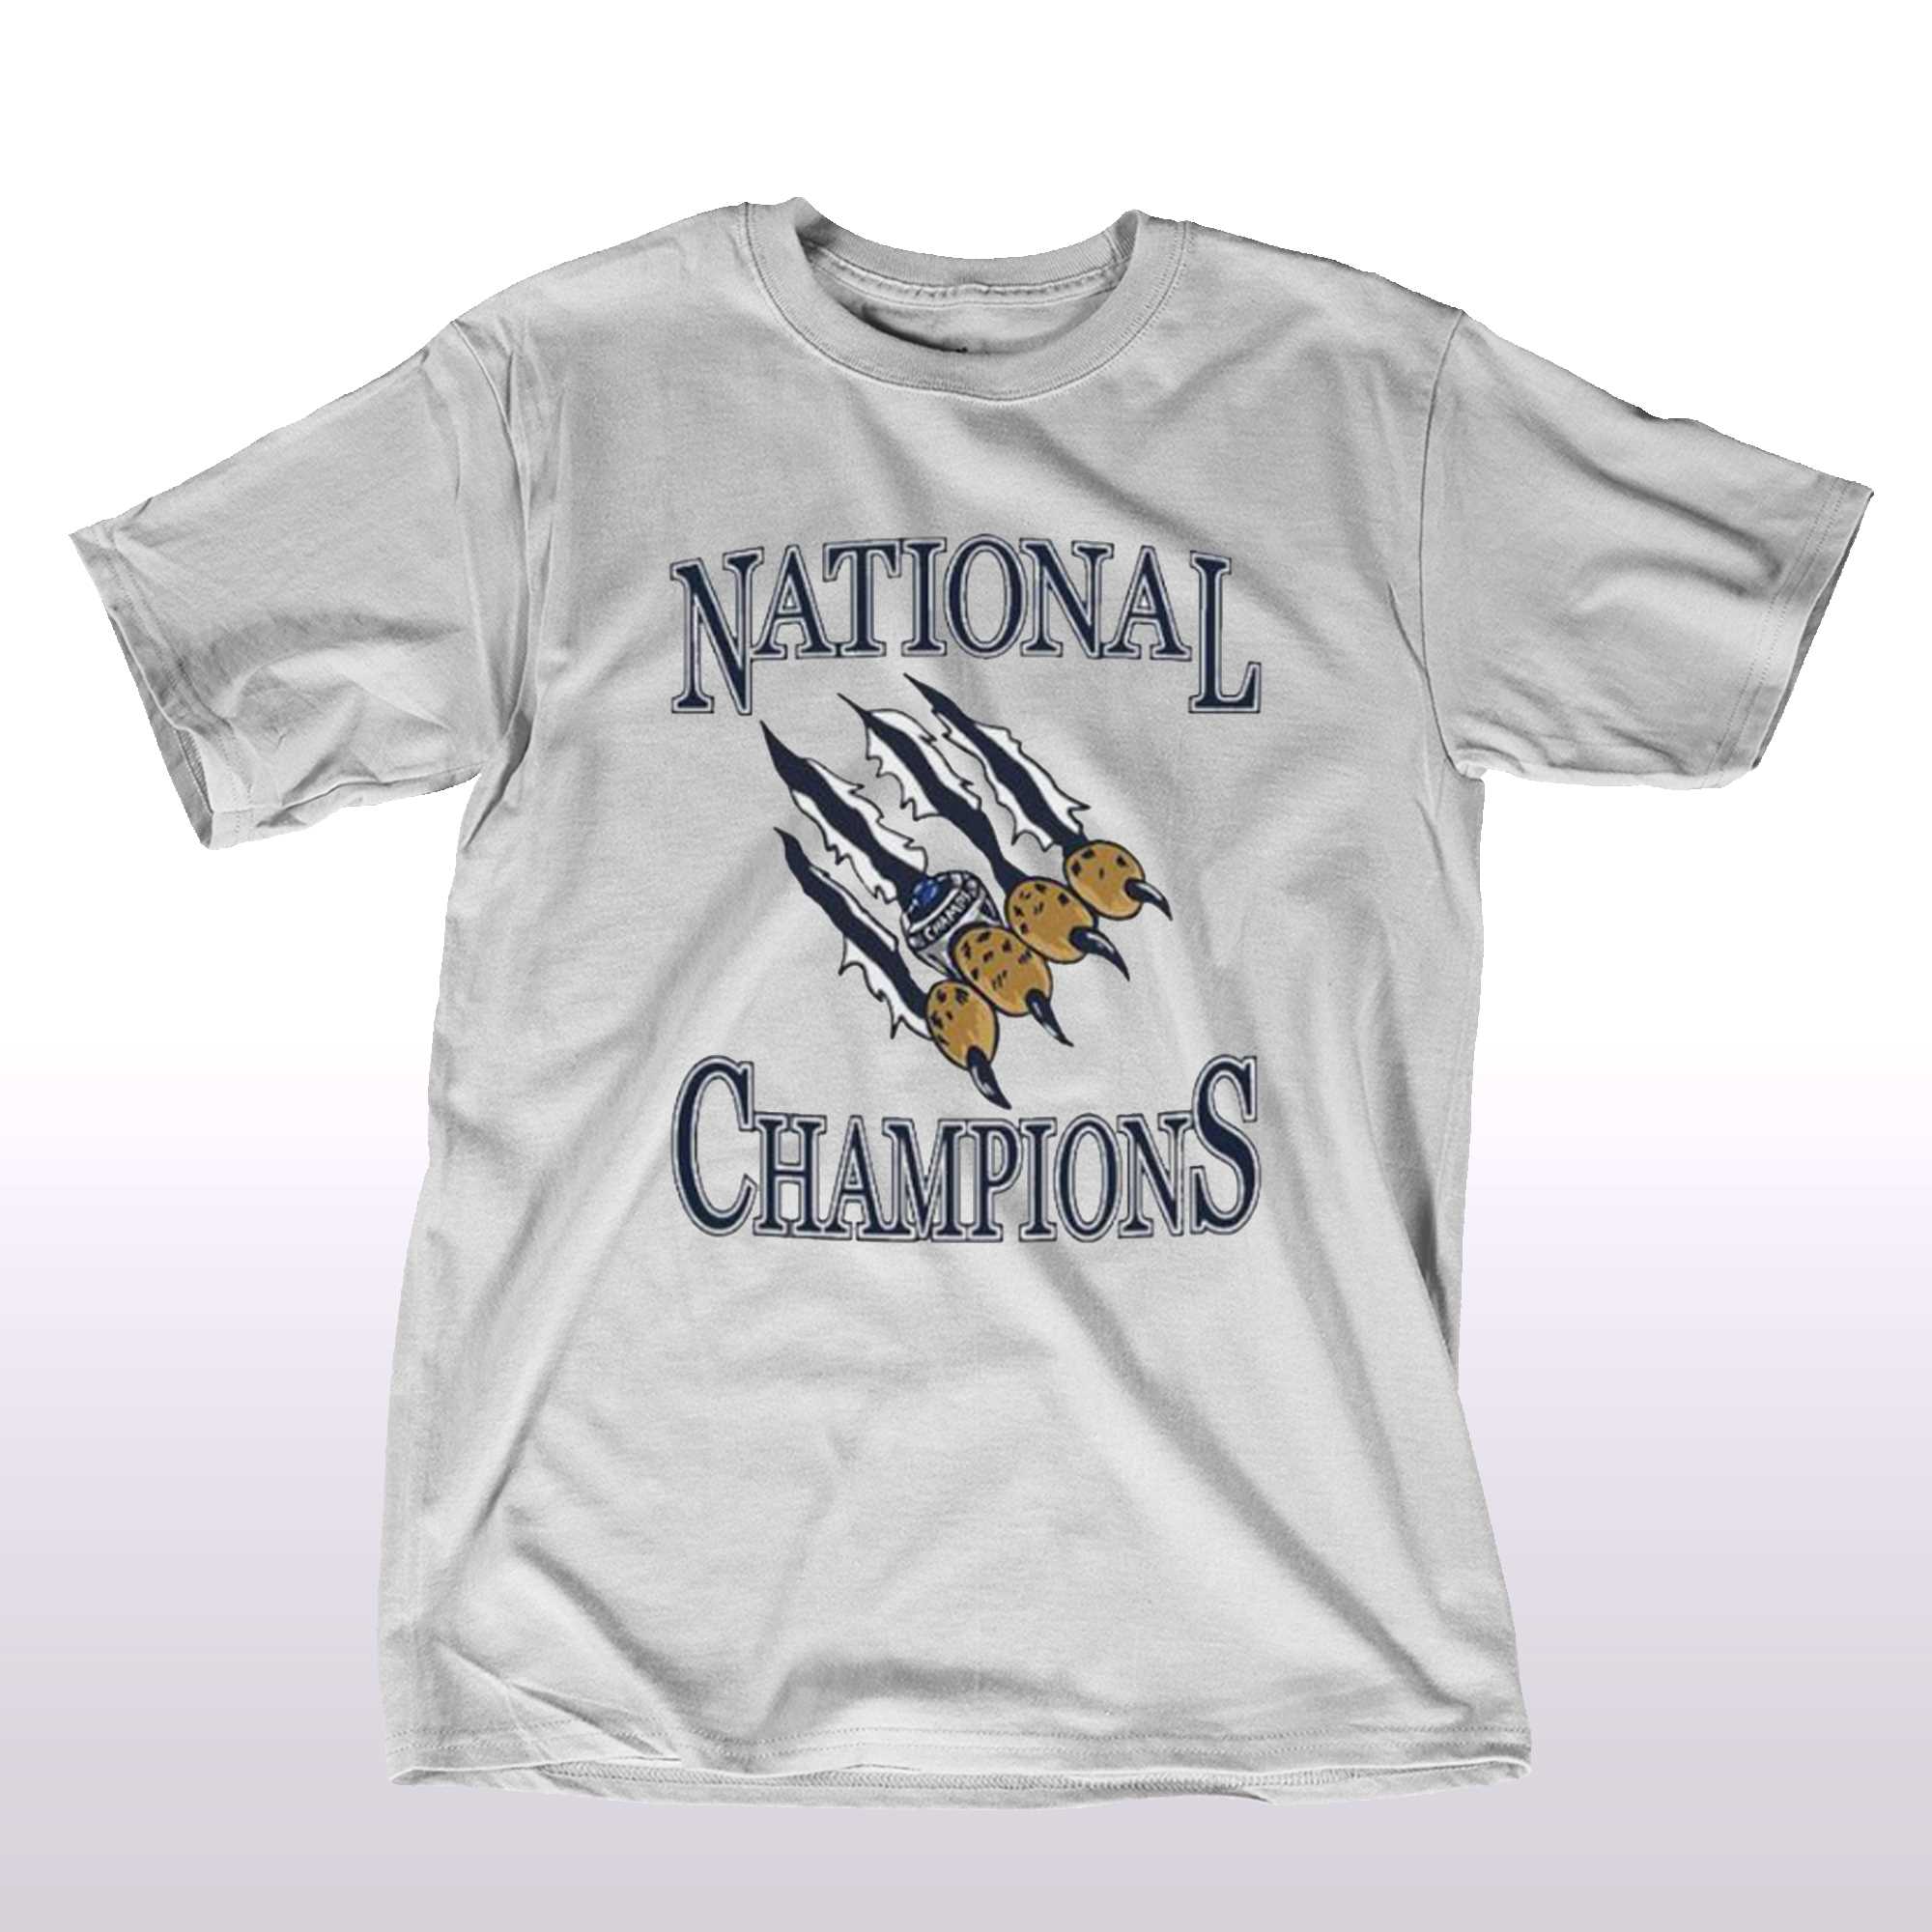 2023 National Tournament T-Shirt